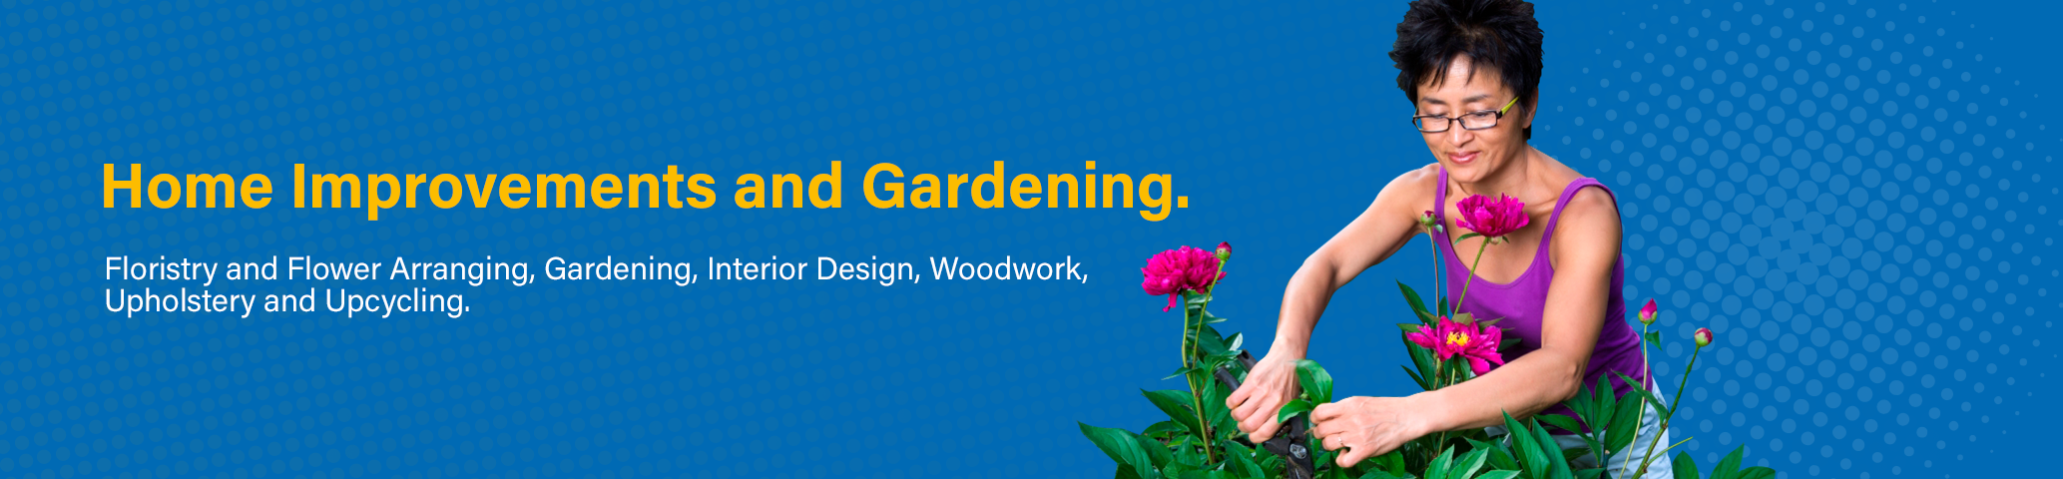 Home Improv Gardening Course Banner